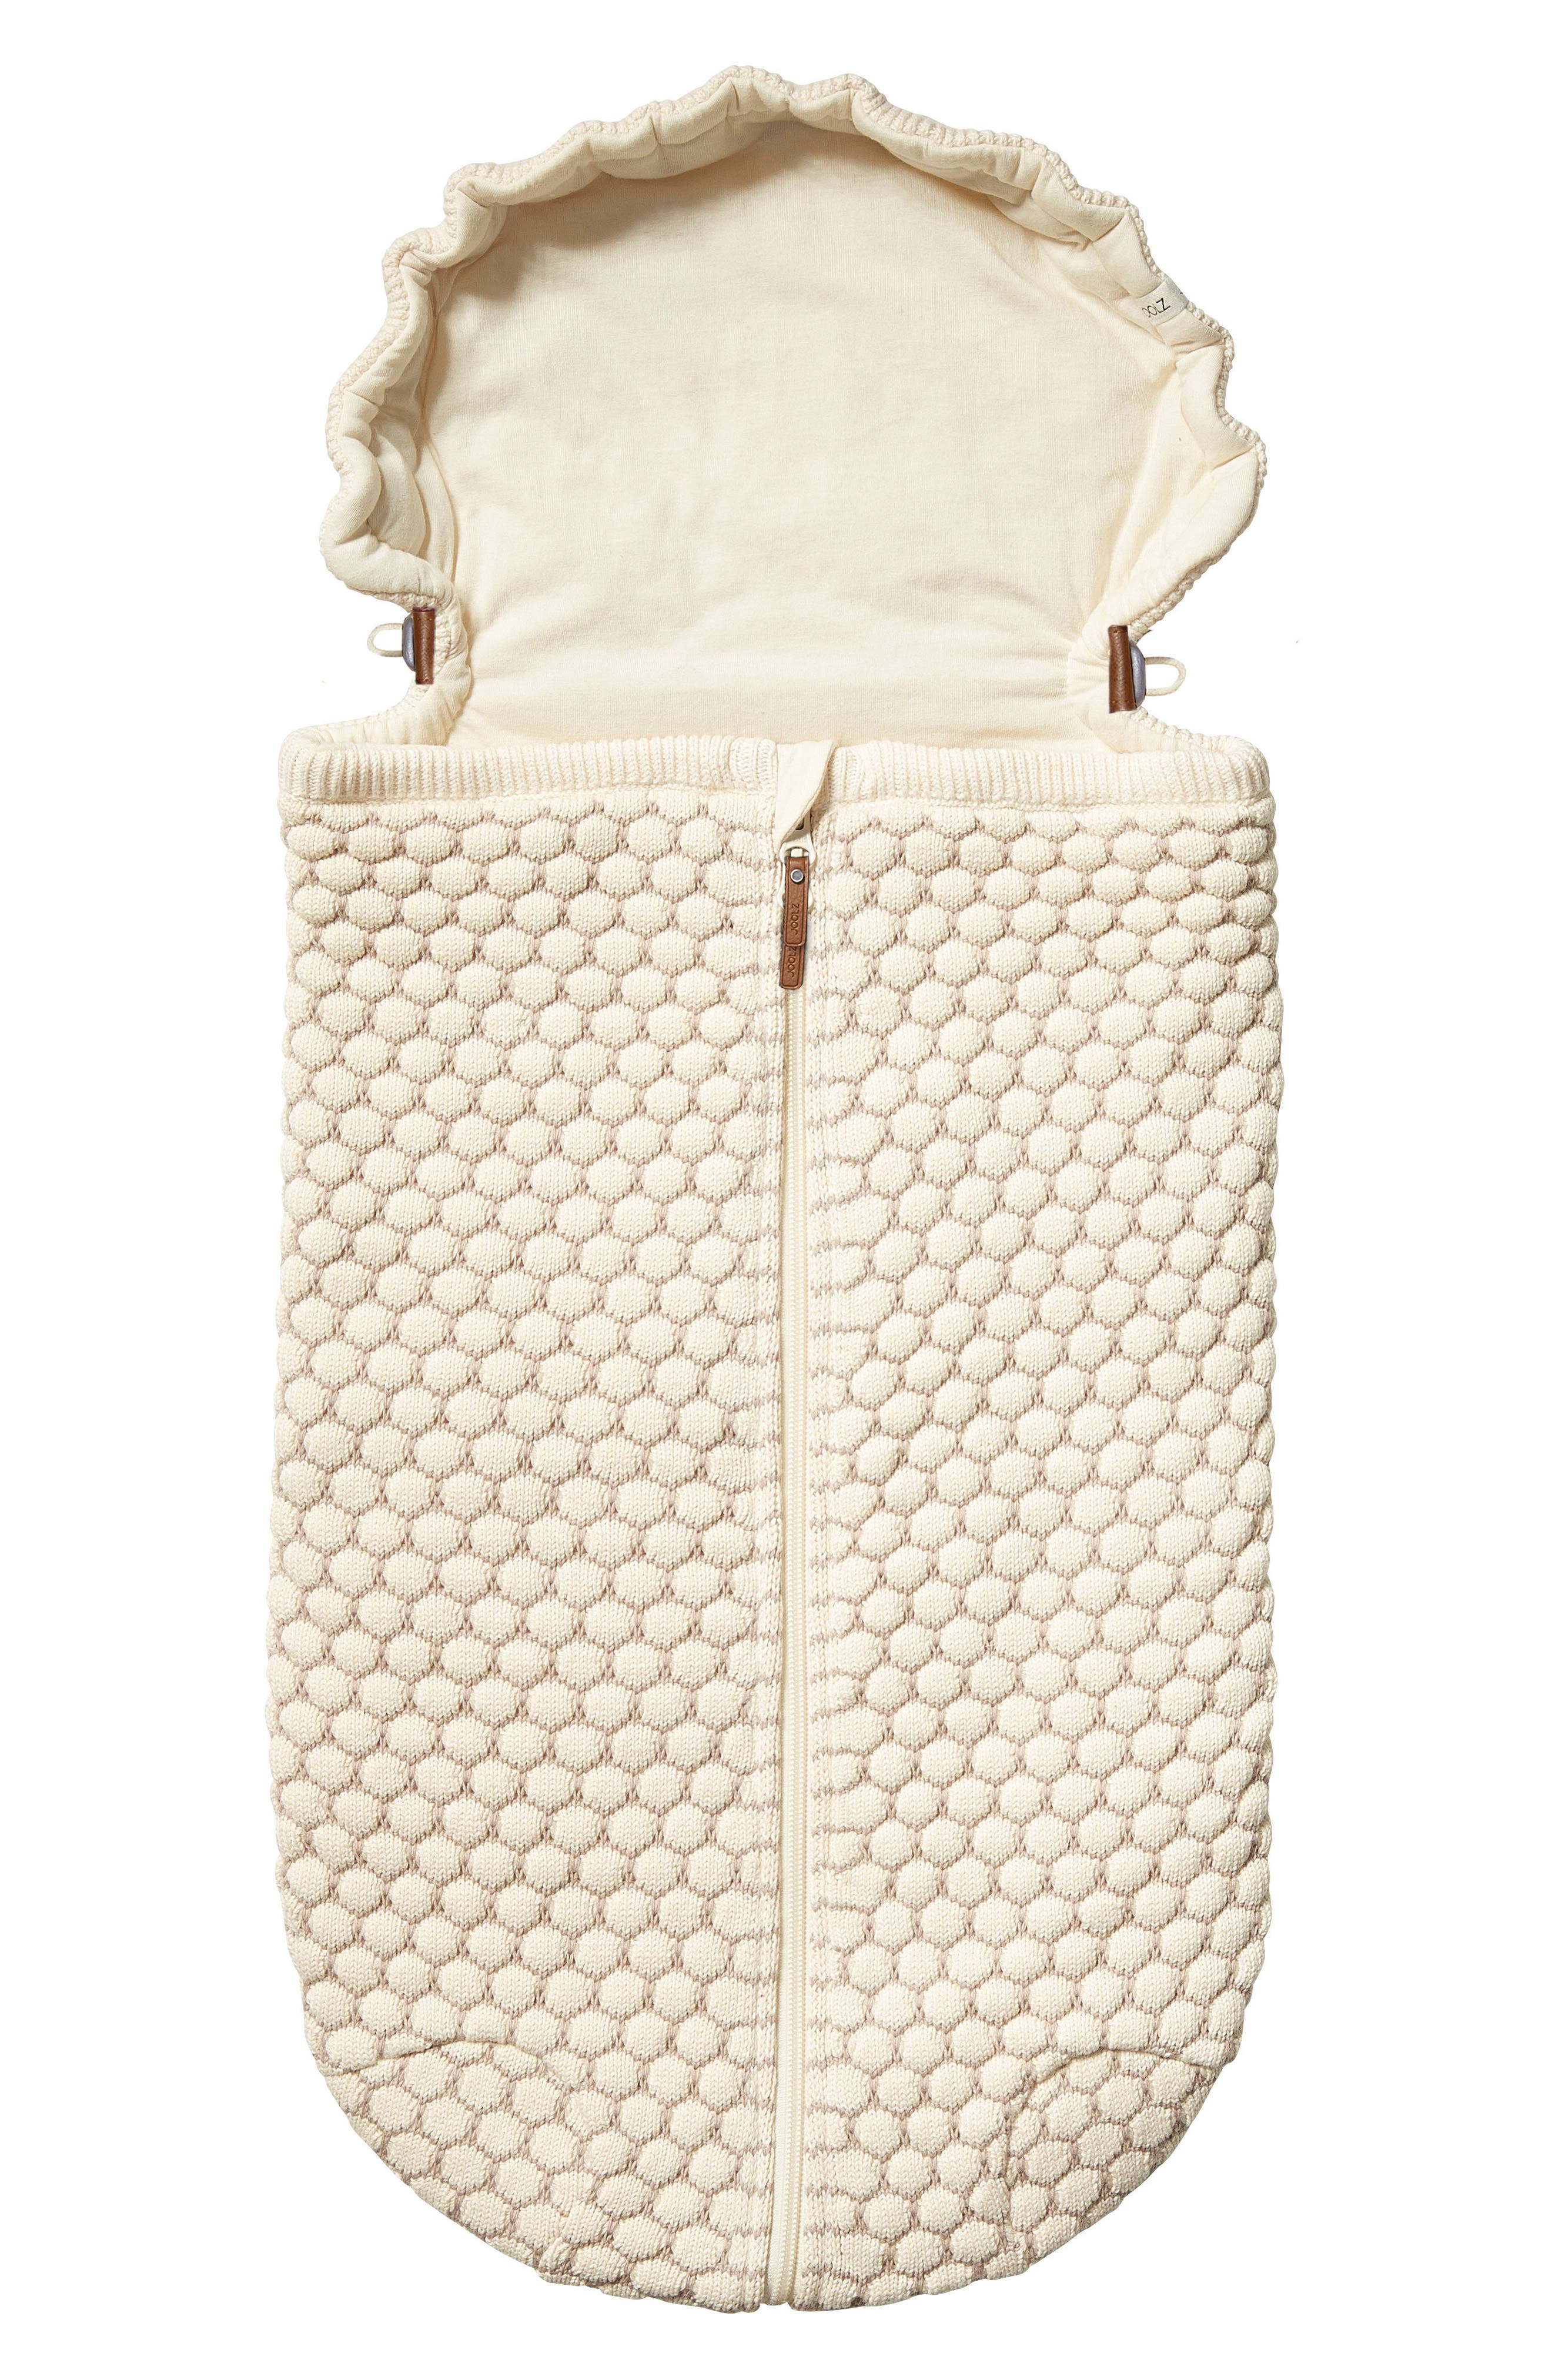 UPC 046200000020 product image for Infant Joolz Essentials Honeycomb Organic Cotton Nest, Size One Size - Ivory | upcitemdb.com